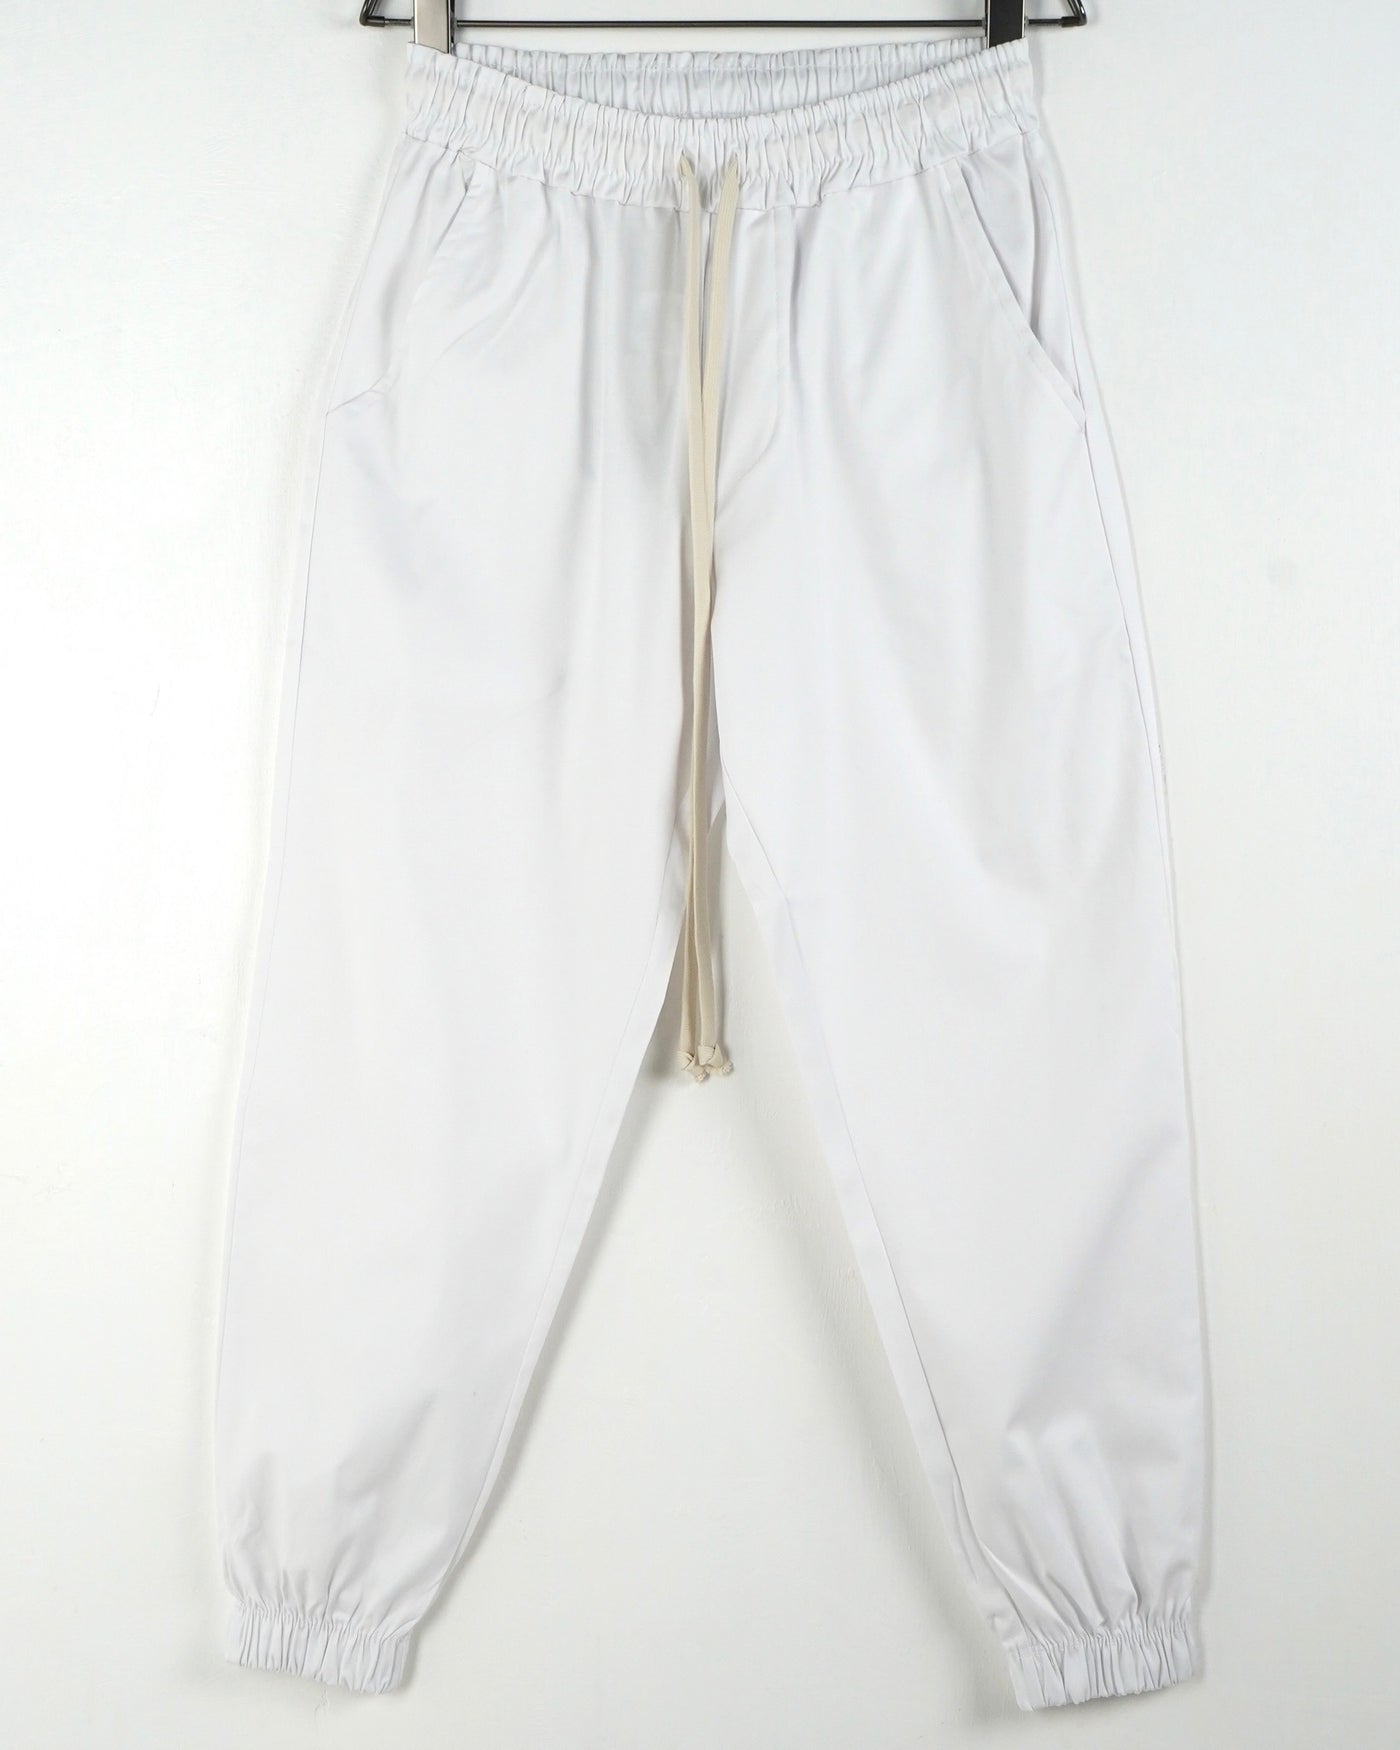 pantalone an008035